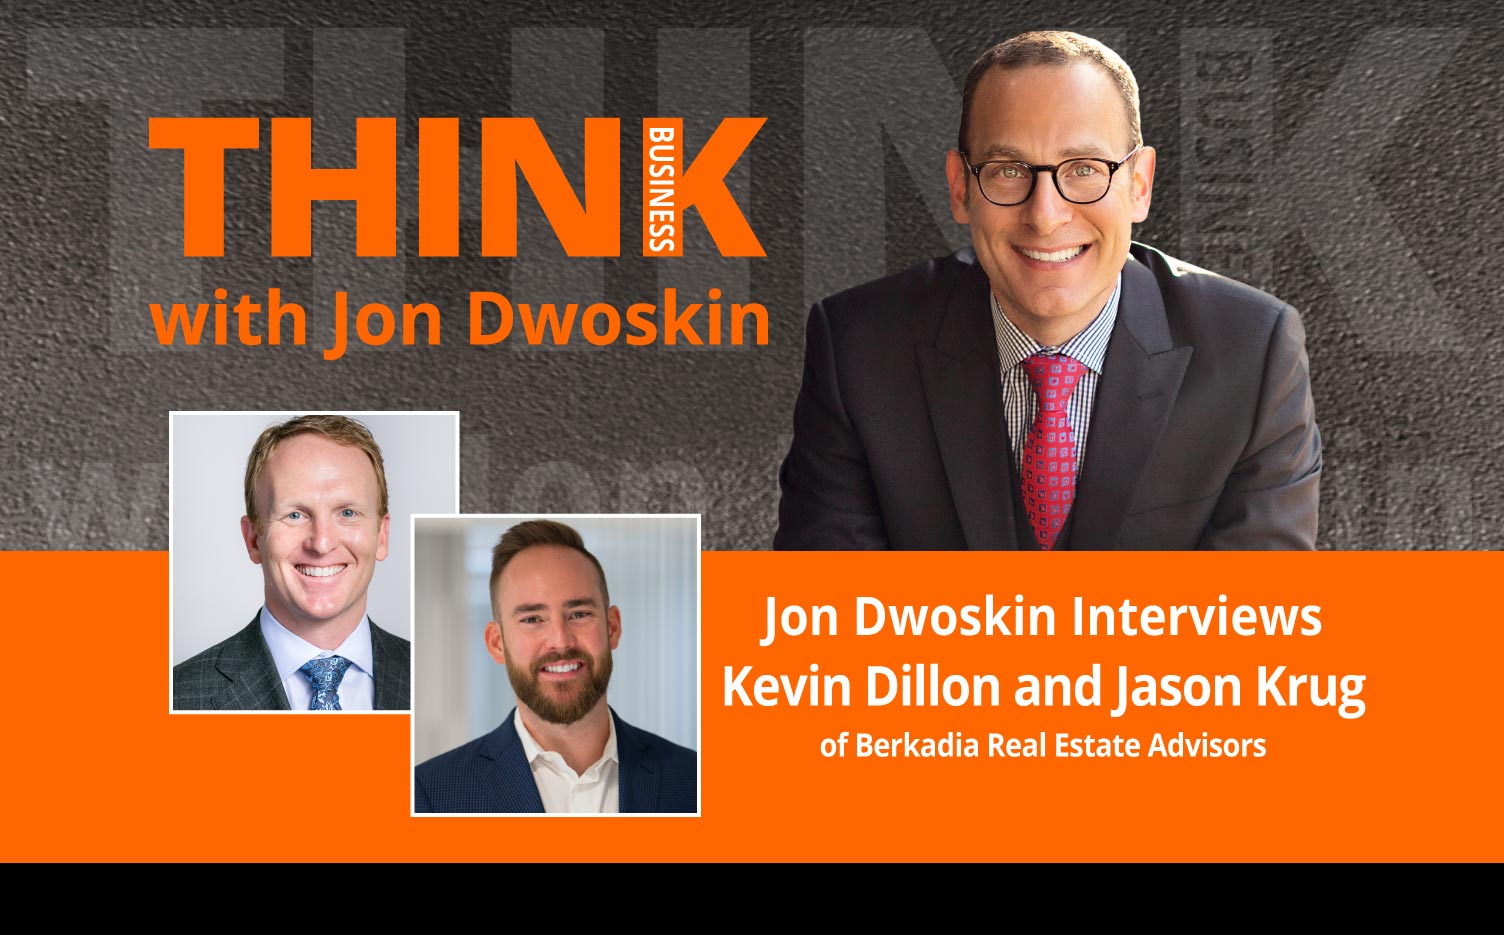 THINK Business Podcast: Jon Dwoskin Interviews Kevin Dillon and Jason Krug of Berkadia Real Estate Advisors